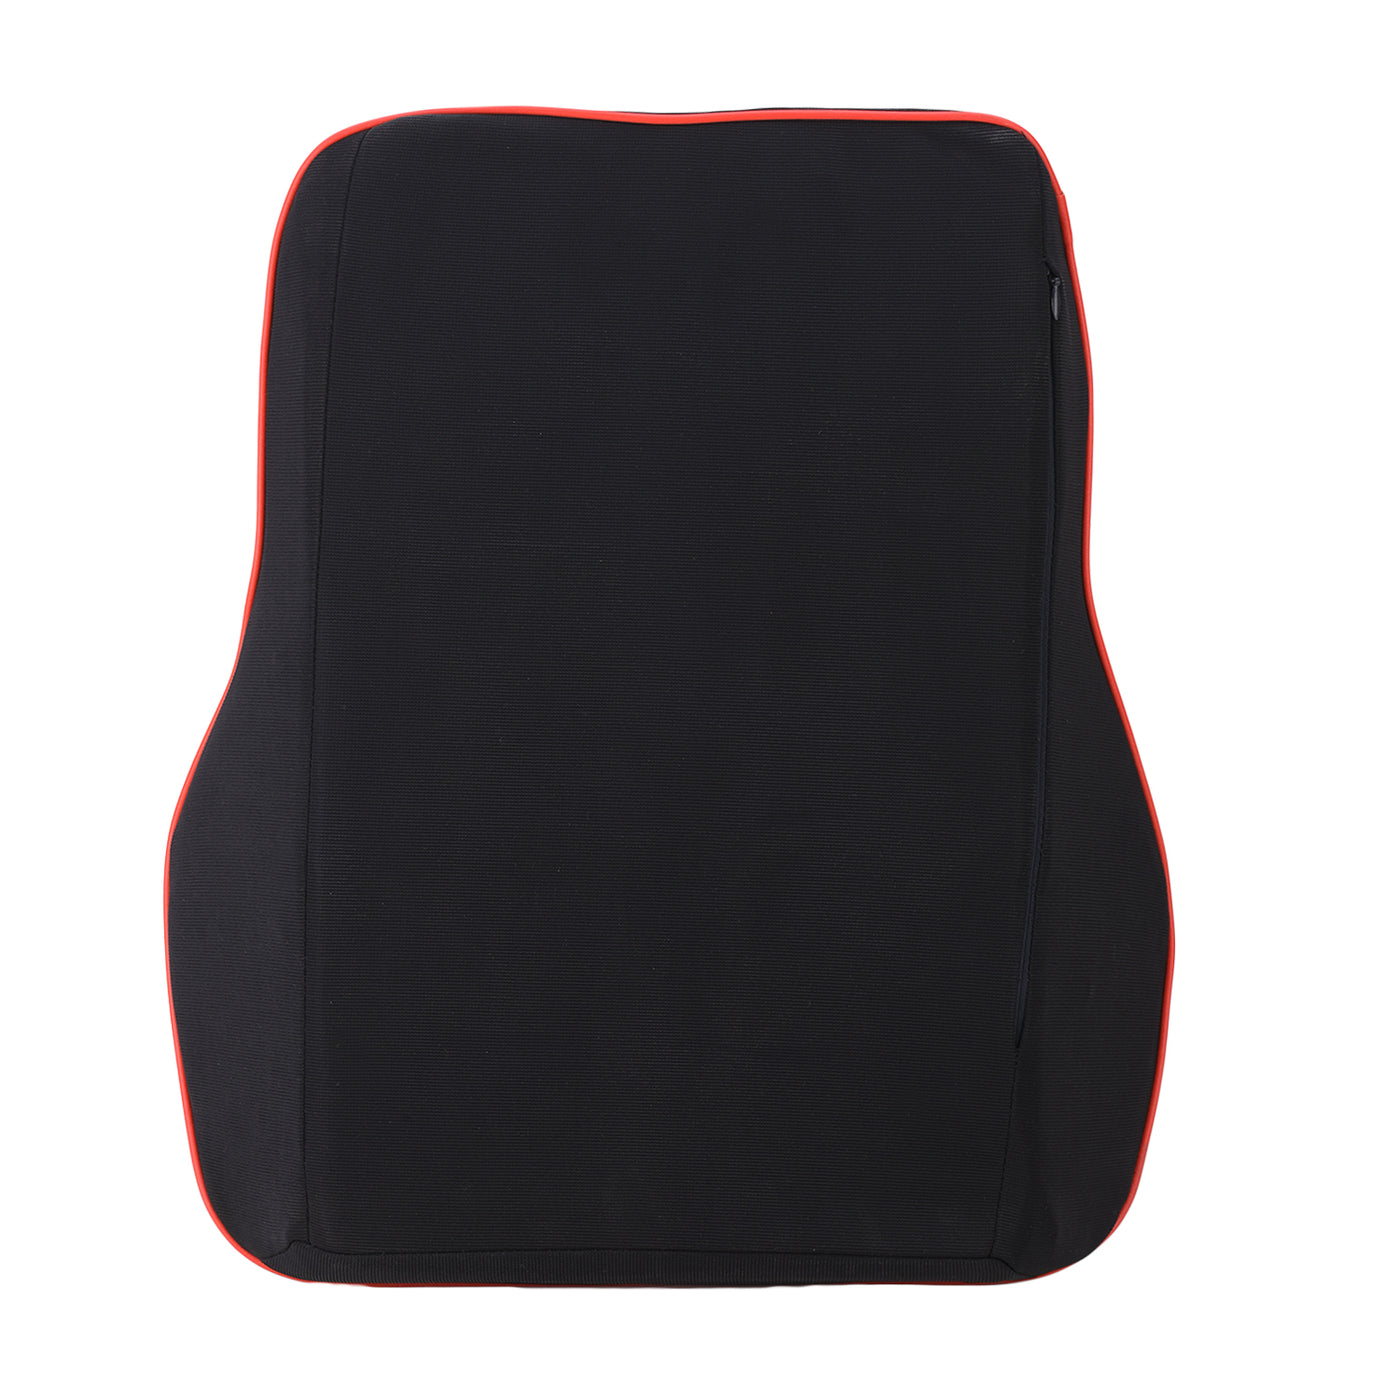 Woscher Memory Foam Back Rest Support (Black Red)